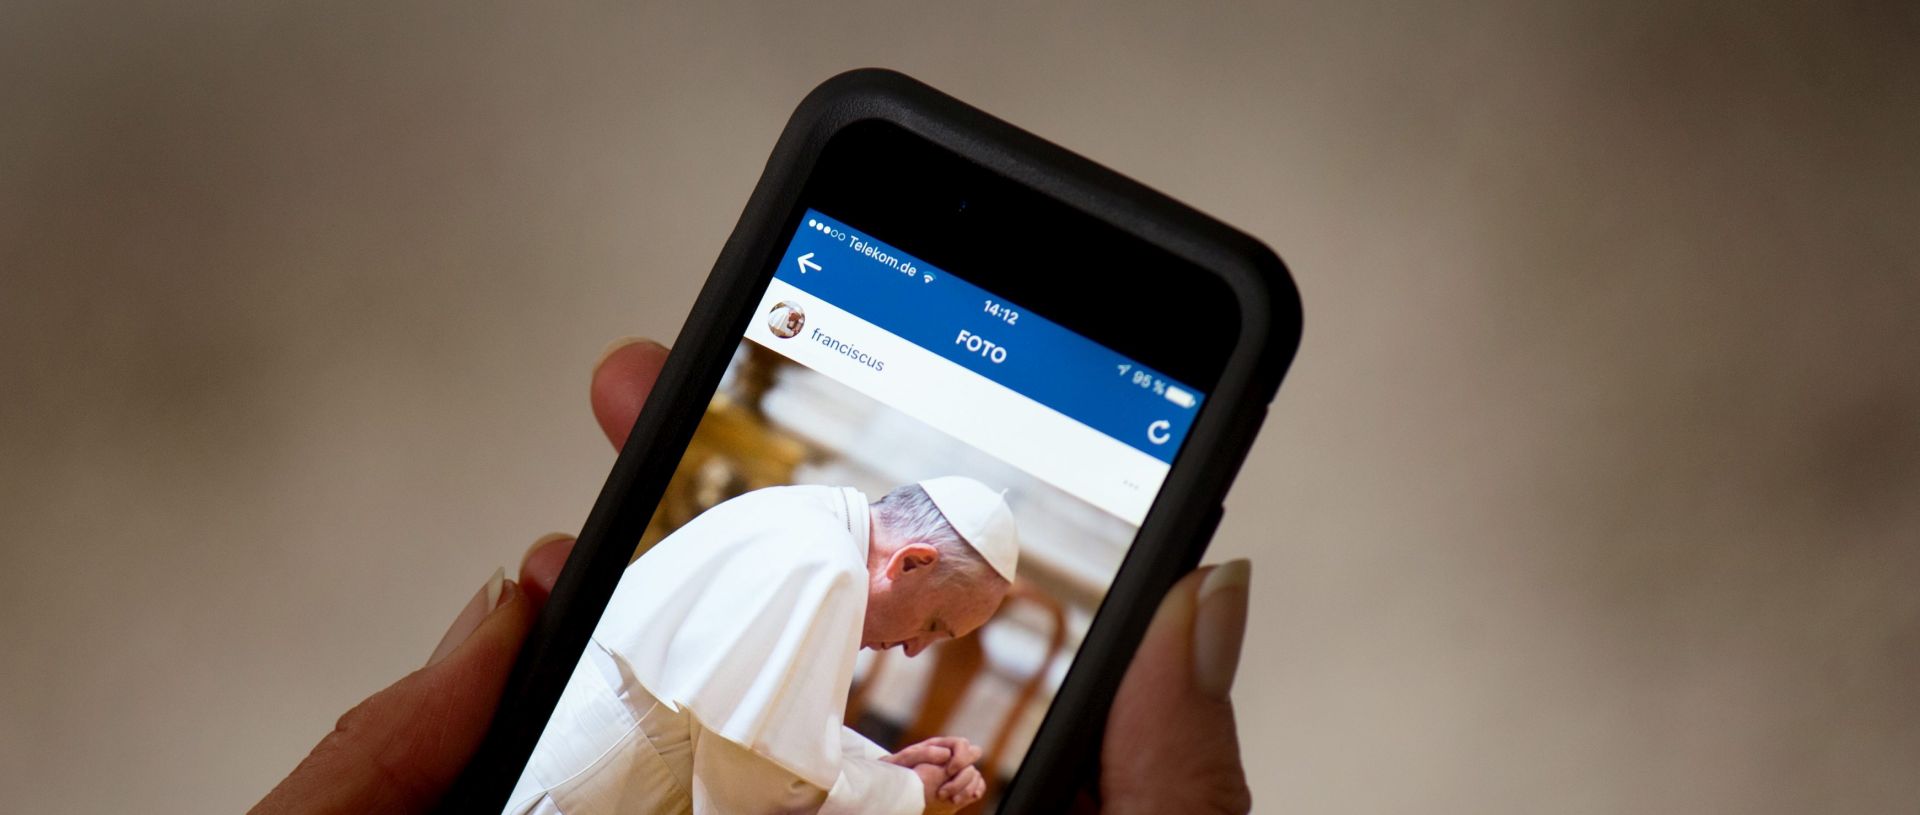 TEHNOLOŠKI ISKORAK: Prva Papina fotografija na Instagramu